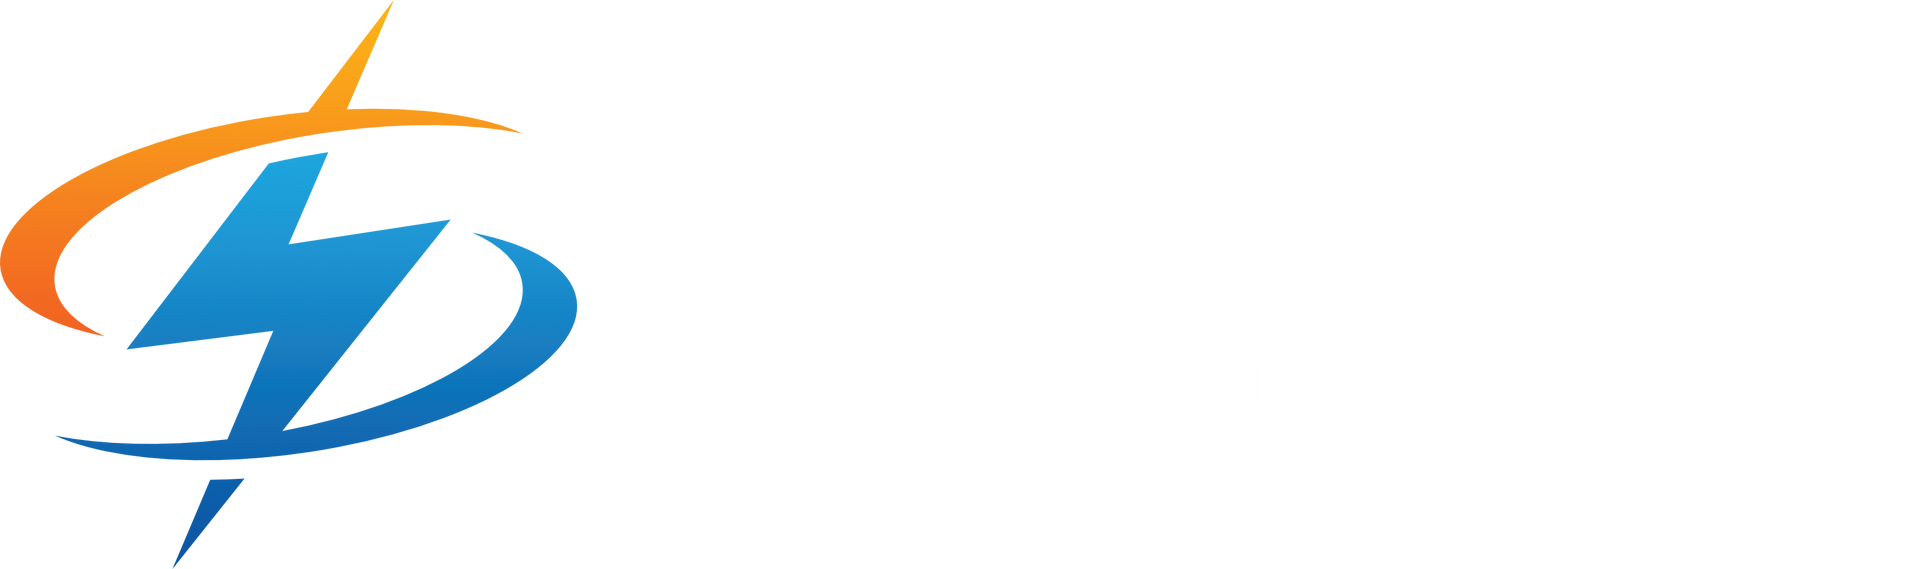 Mark Rawstorn Electrical small logo